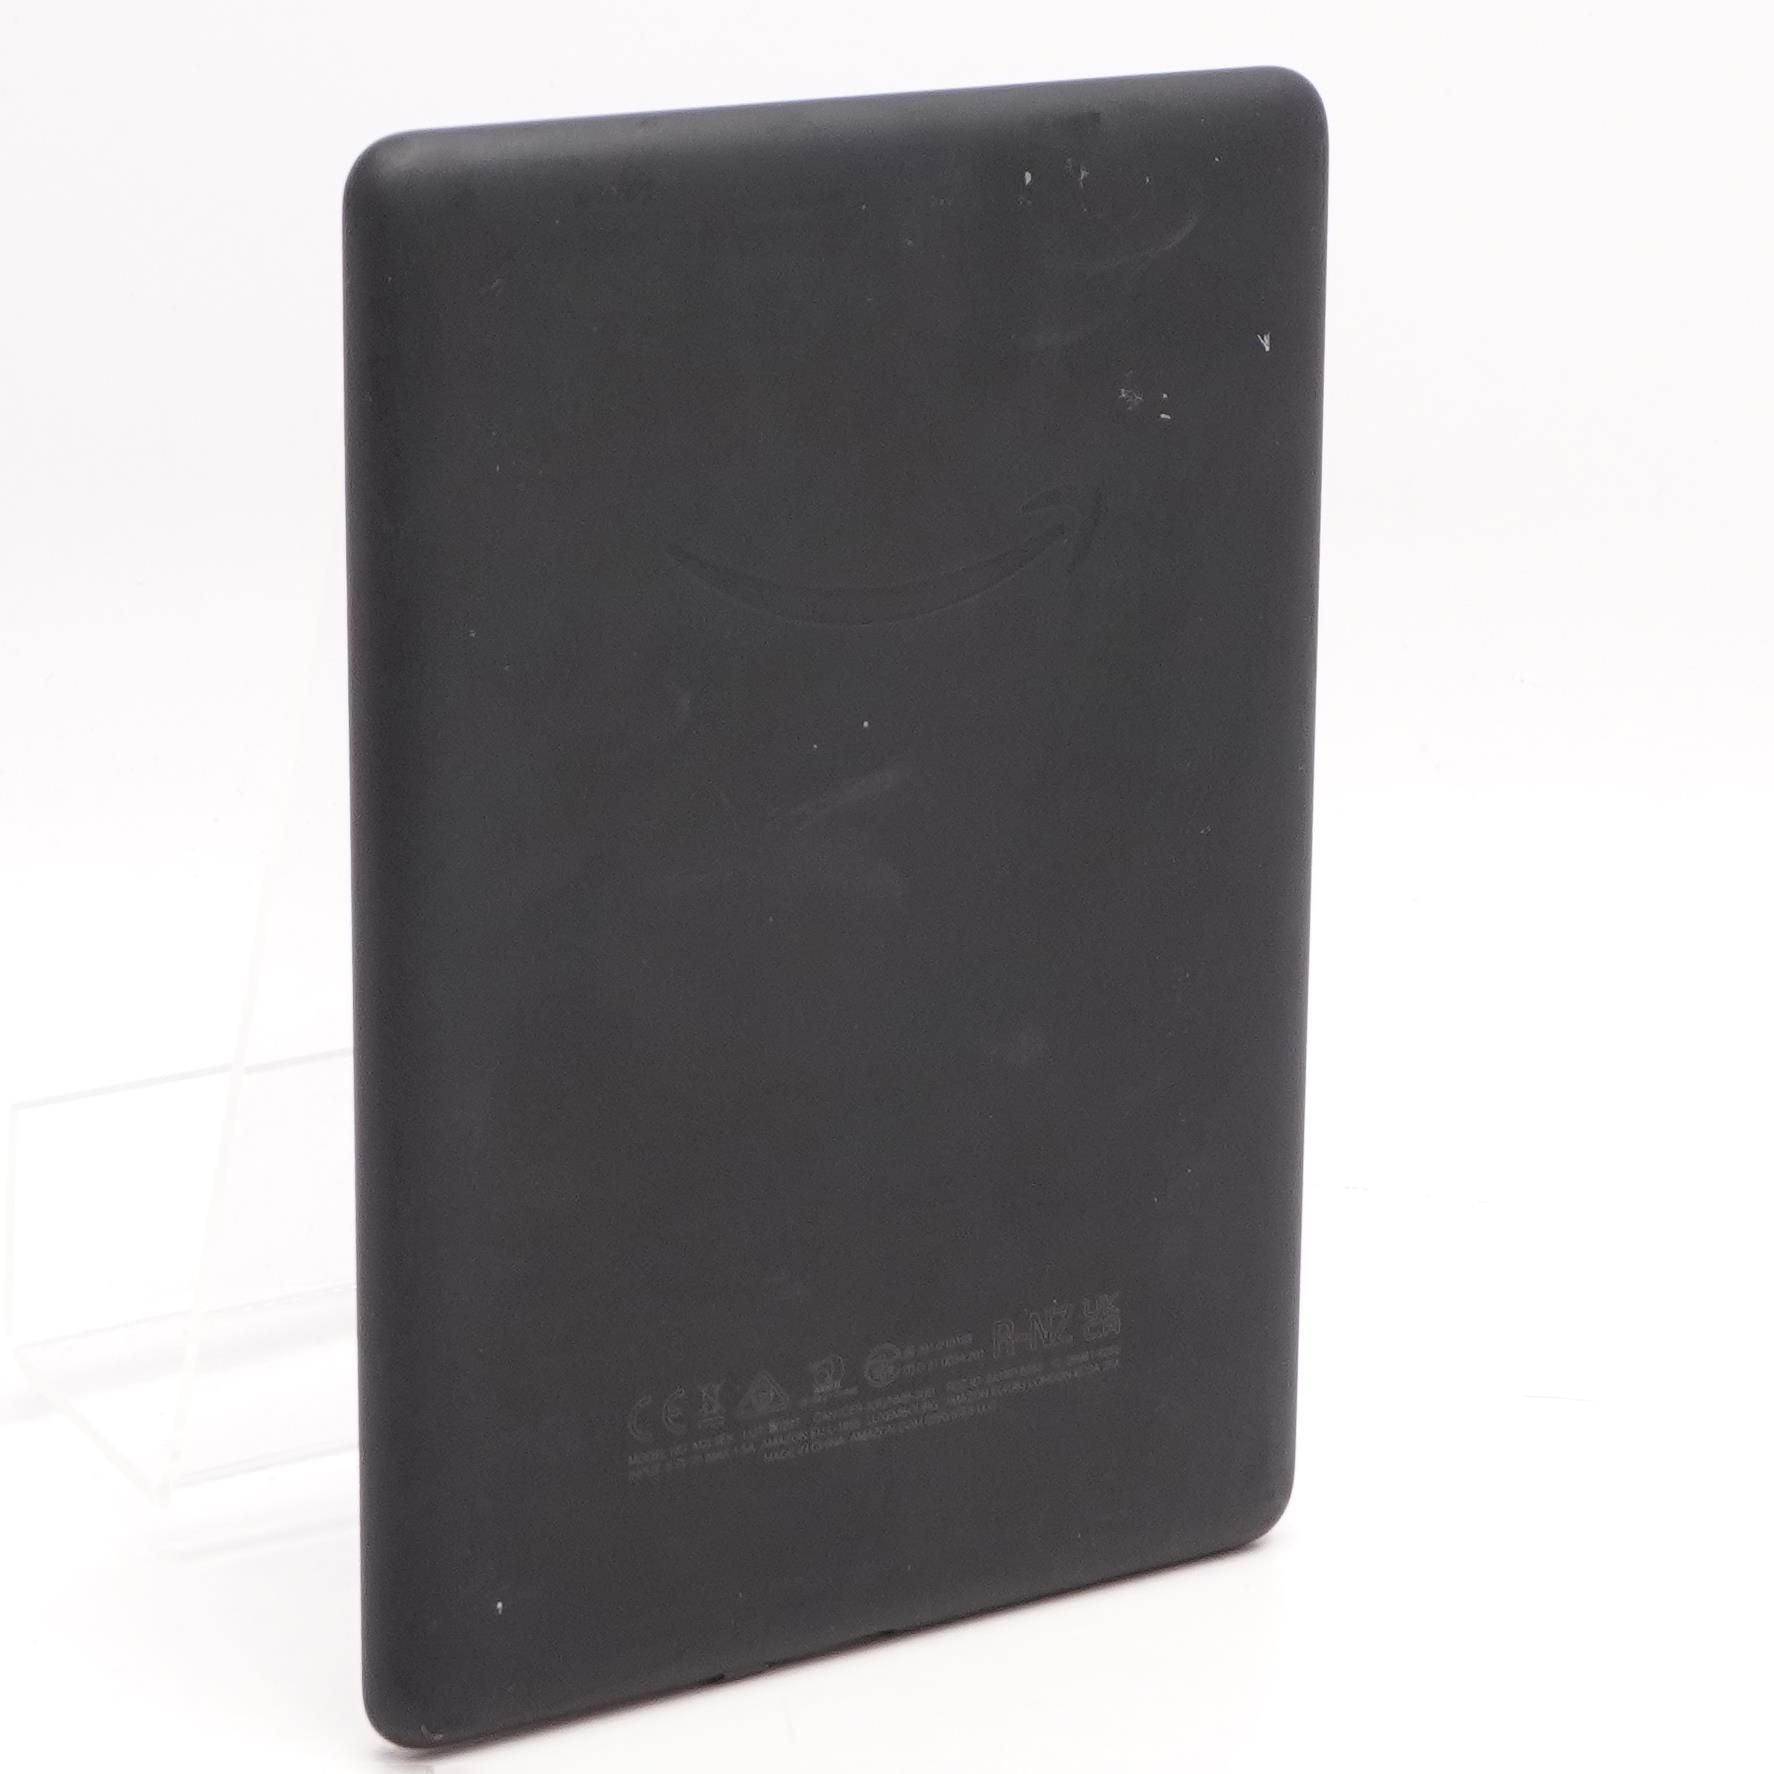 Kindle Paperwhite (11th Gen) M2L3EK 8GB E-Reader - Black